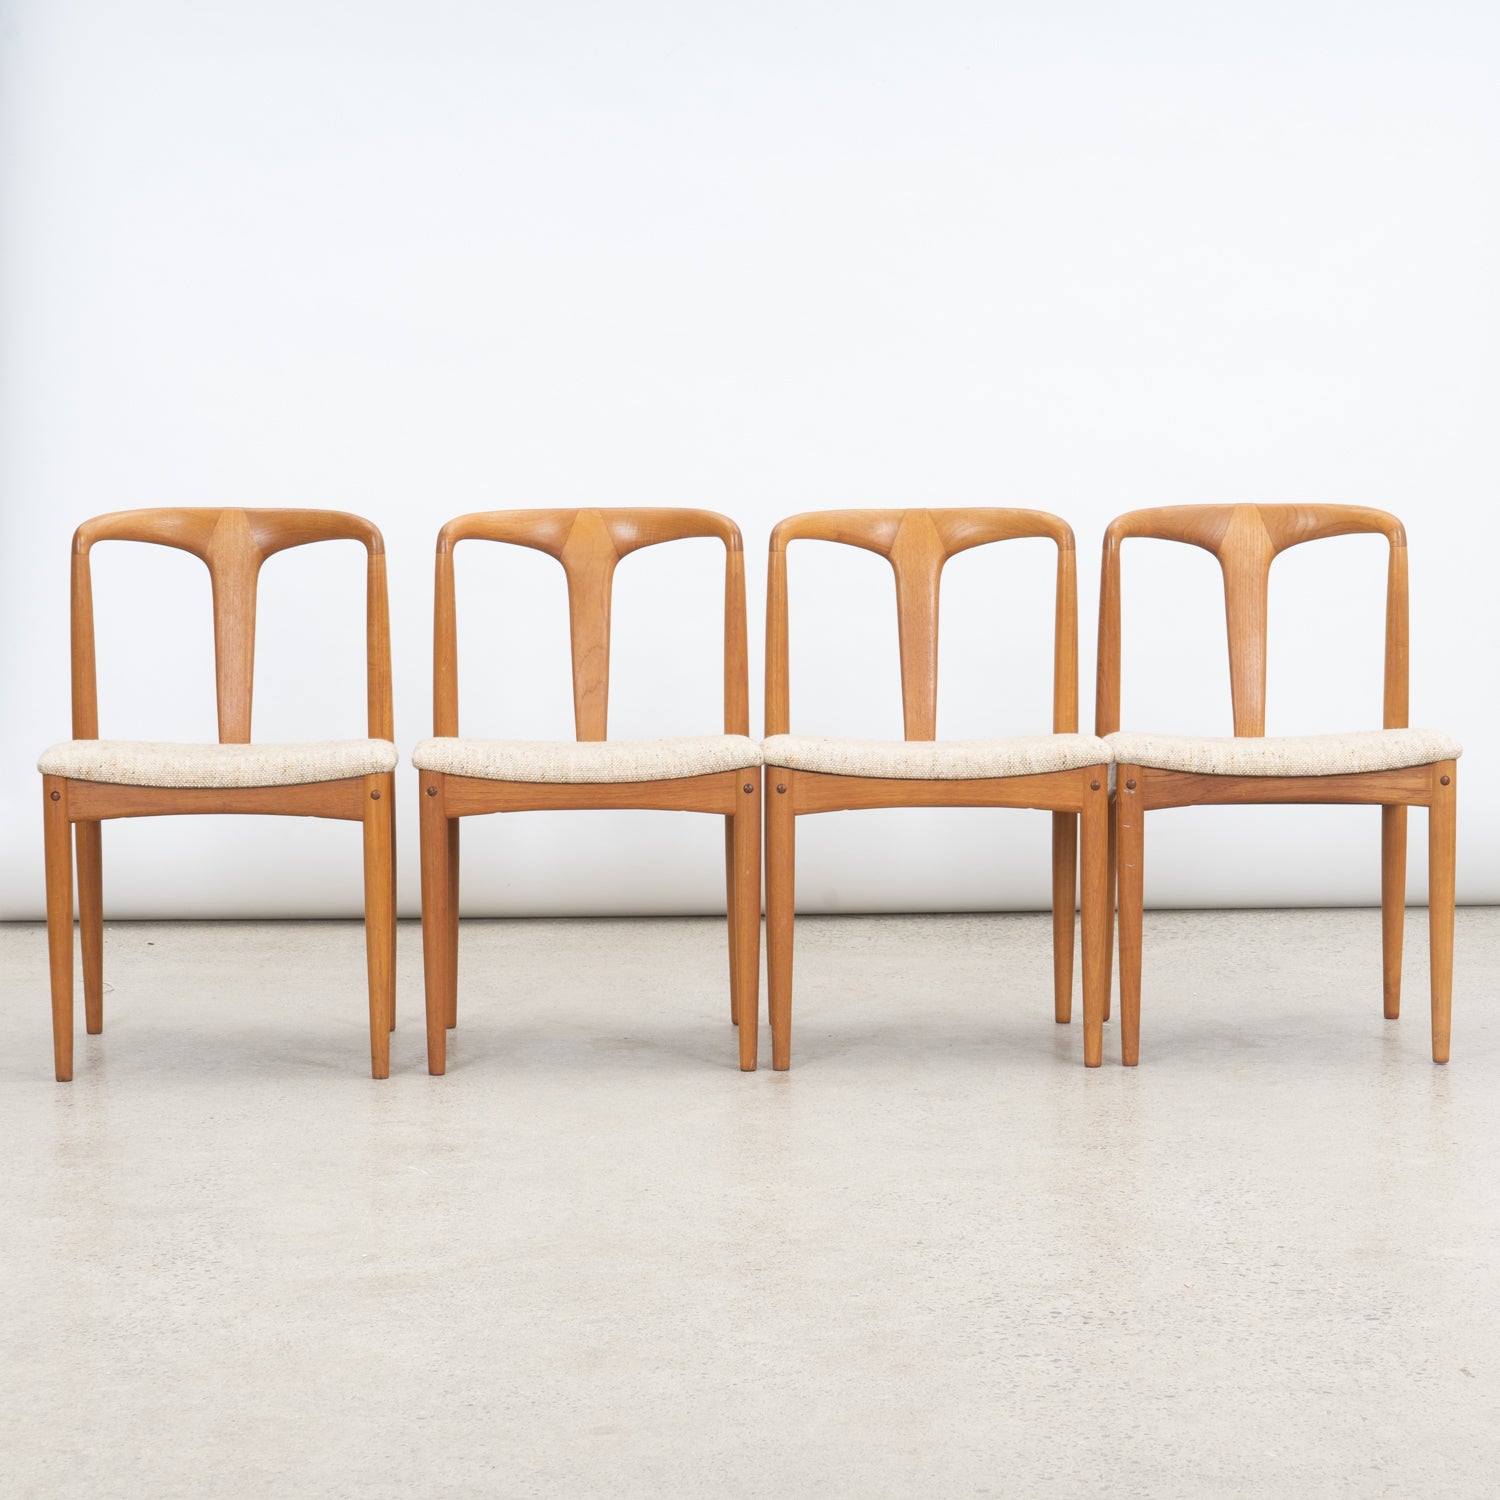 Set of 4 Teak 'Juliane' Dining Chairs by Johannes Andersen. Danish Design. Mid-century modern. Scandinavian modern.